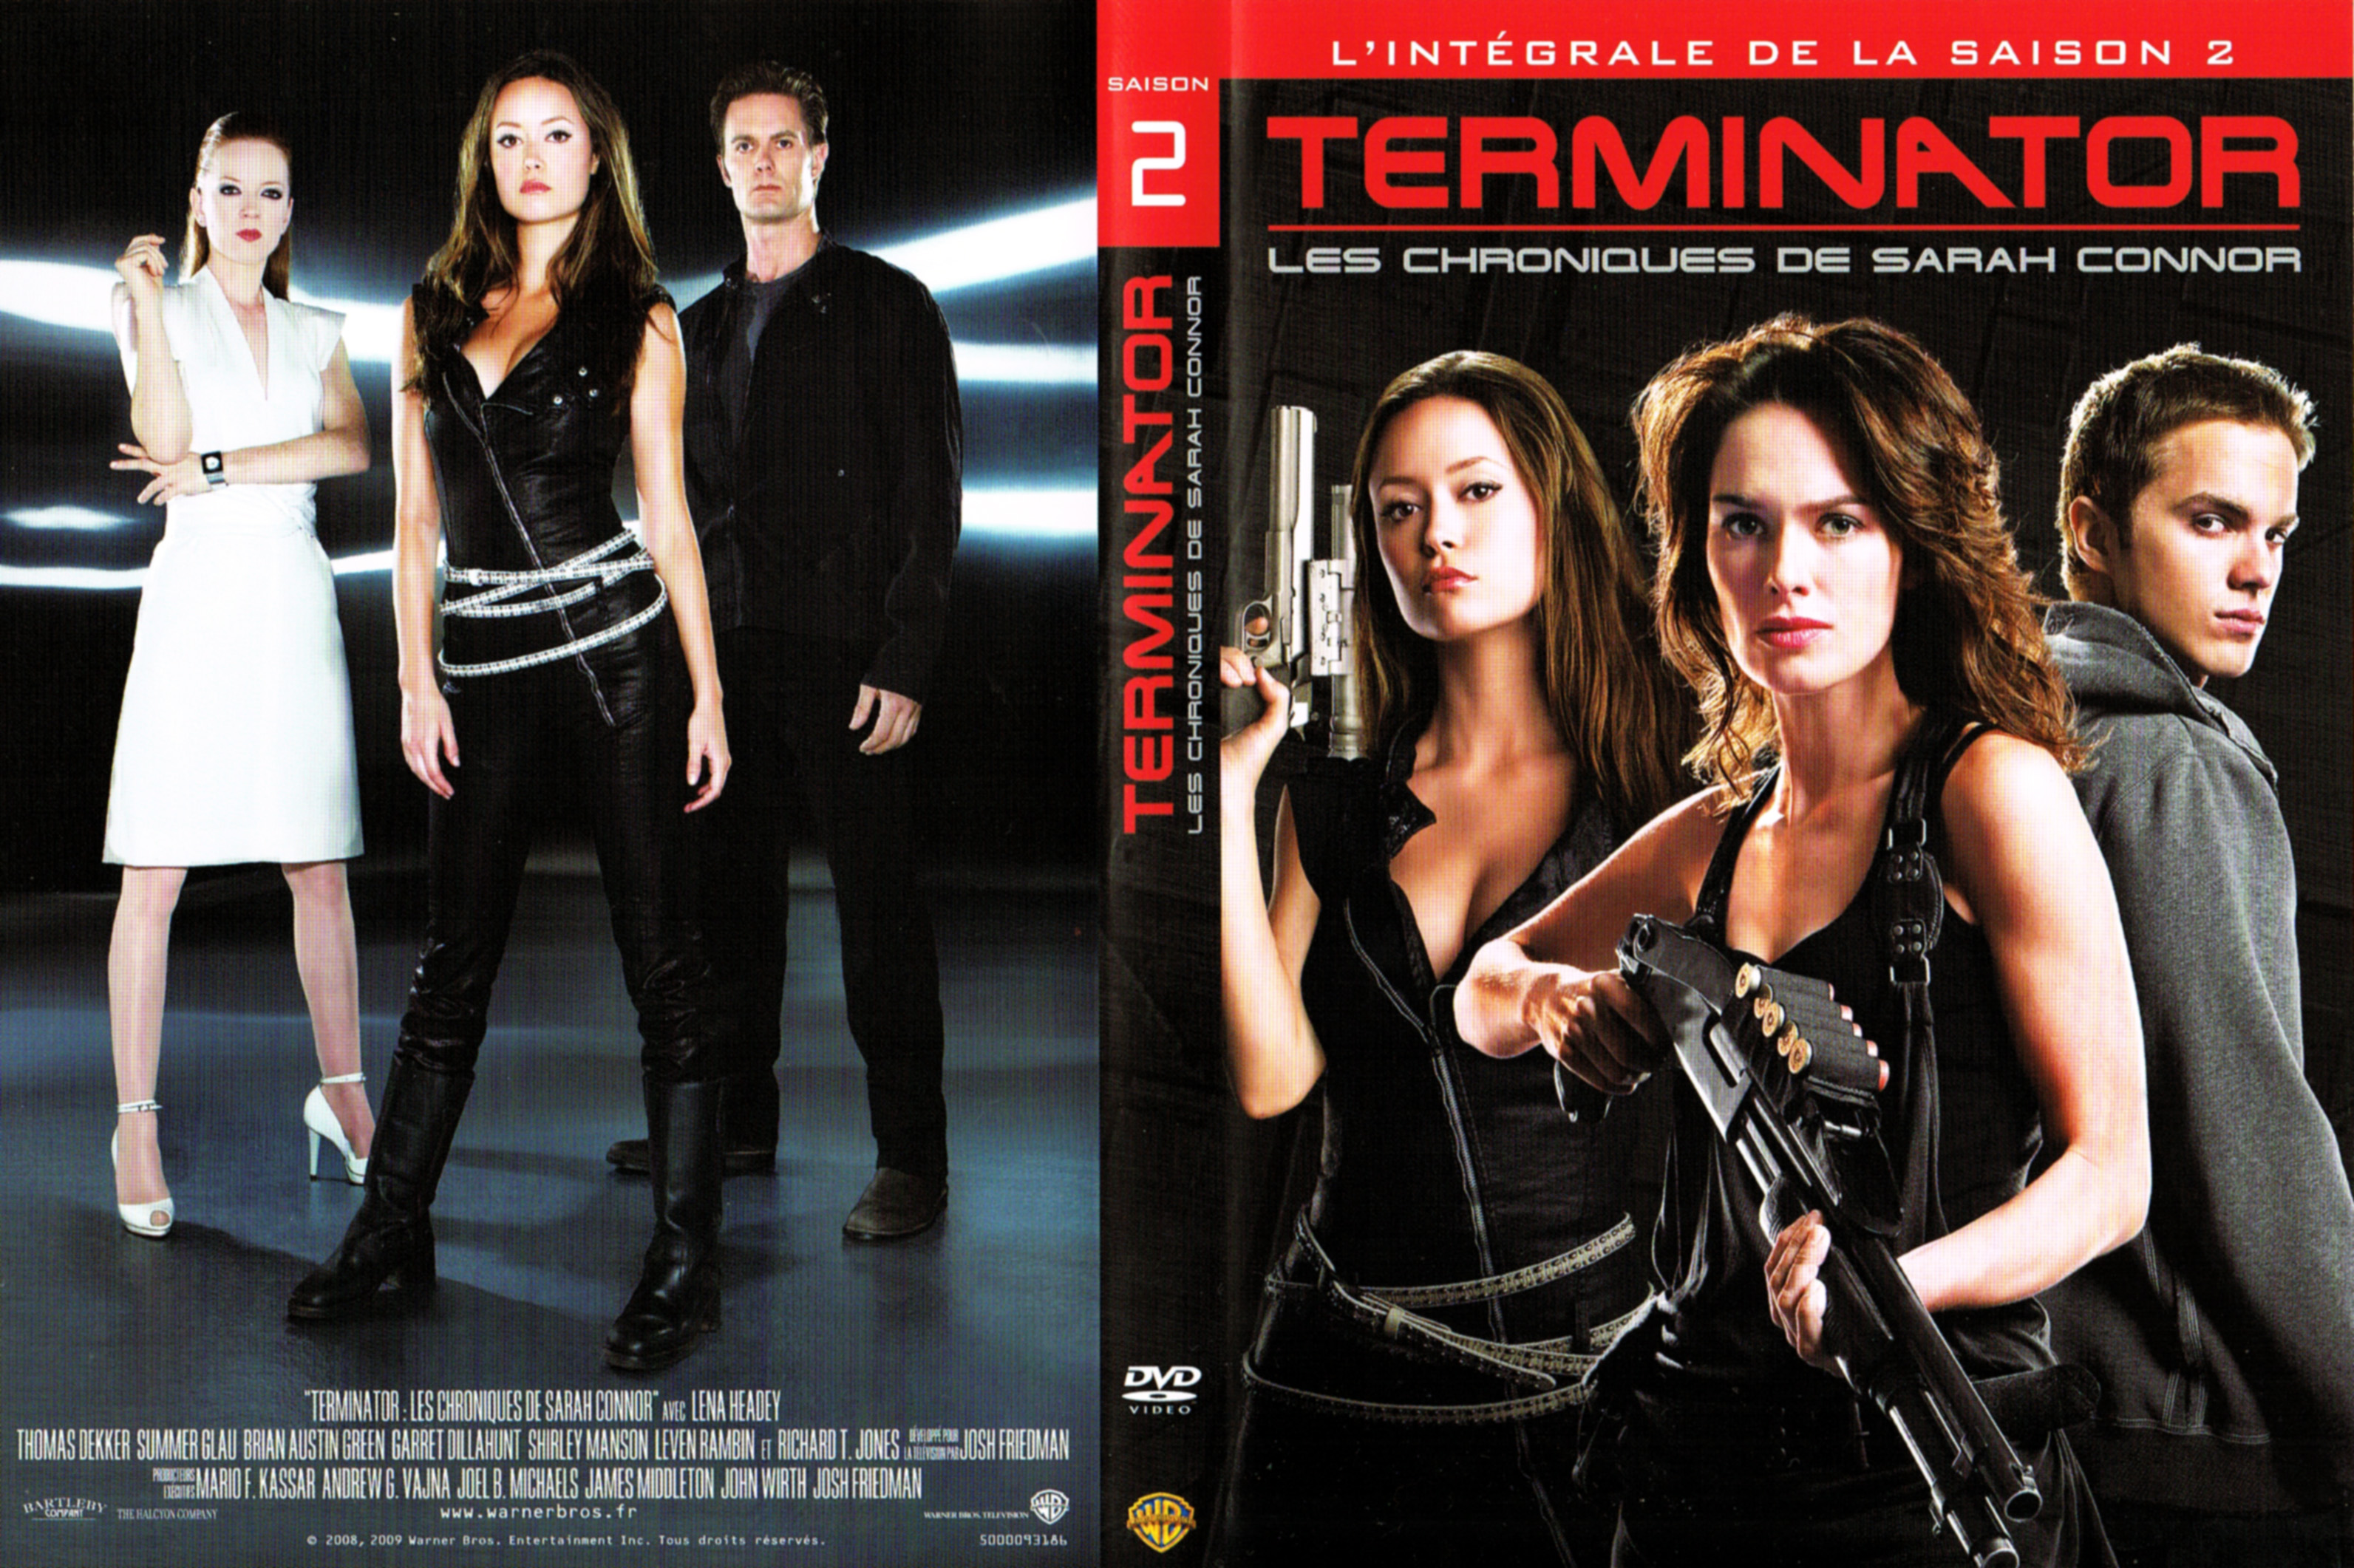 Jaquette DVD Terminator The Sarah Connor Chronicles Saison 2 v2